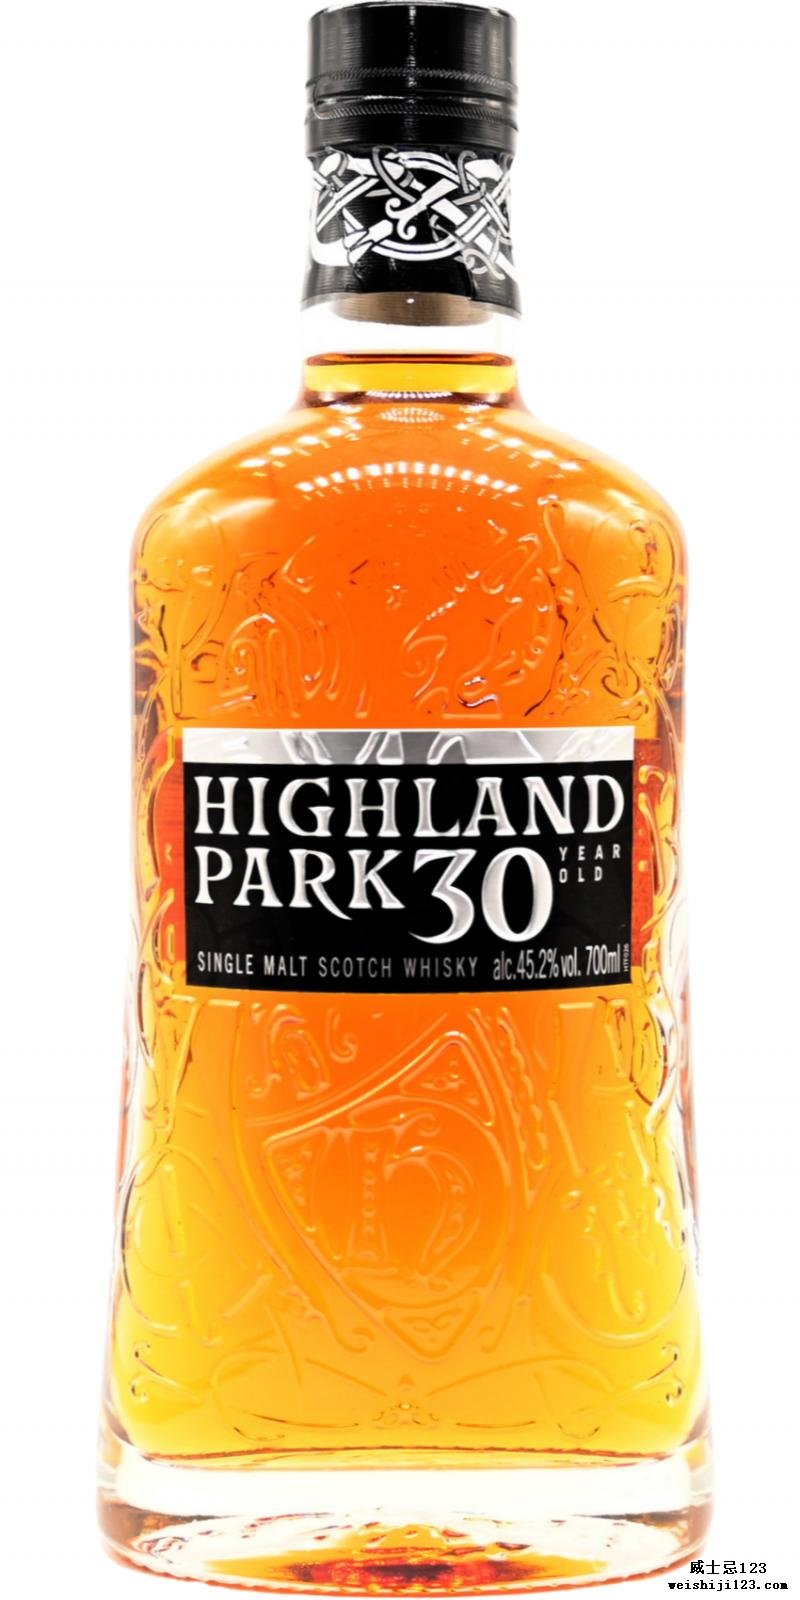 Highland Park 30-year-old